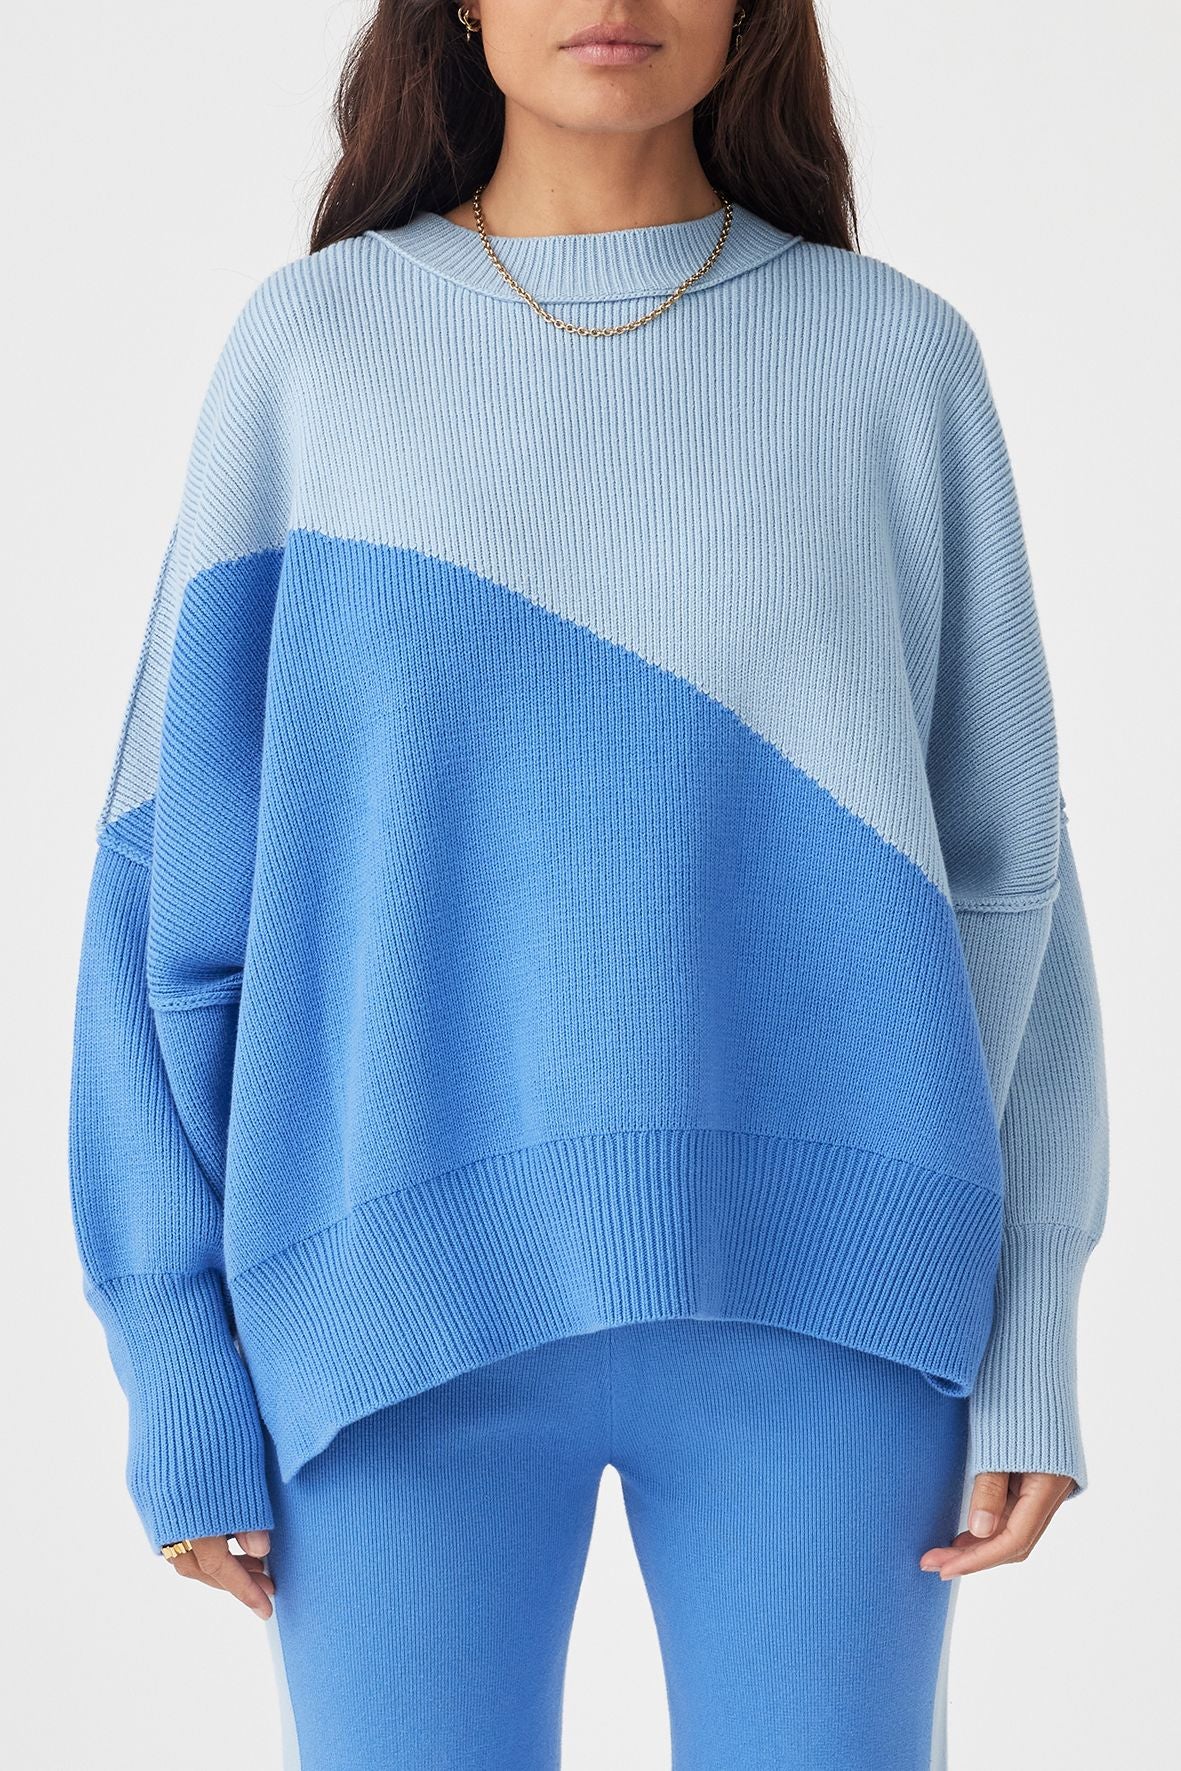 ARCAA Neo sweater - Azure & powder blue